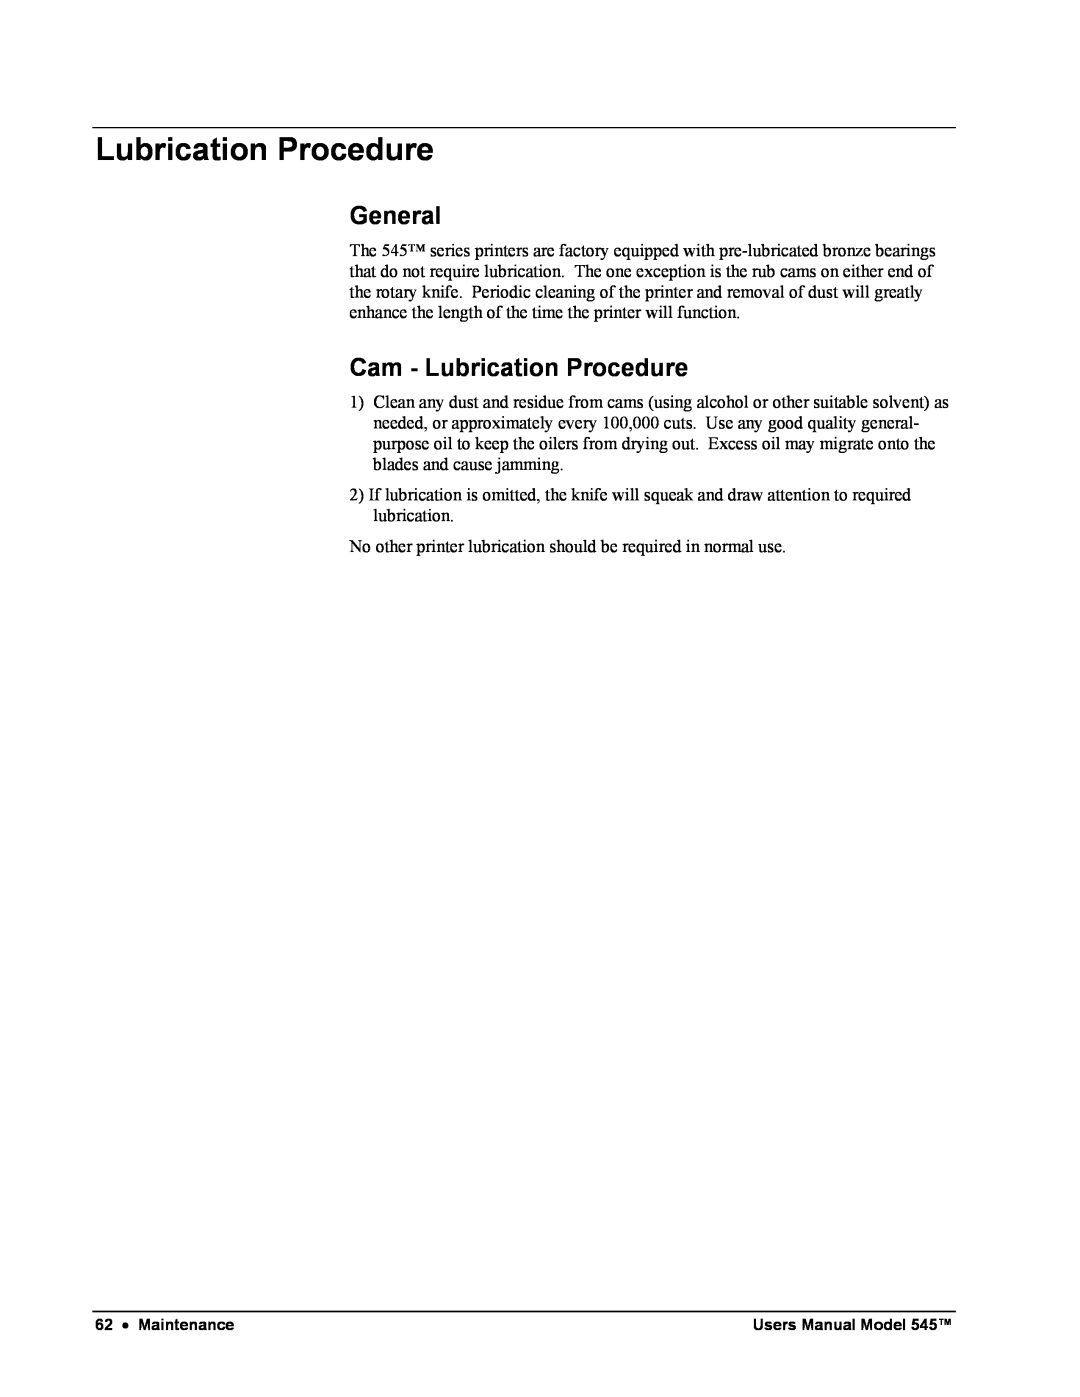 Paxar 545 user manual General, Cam - Lubrication Procedure 